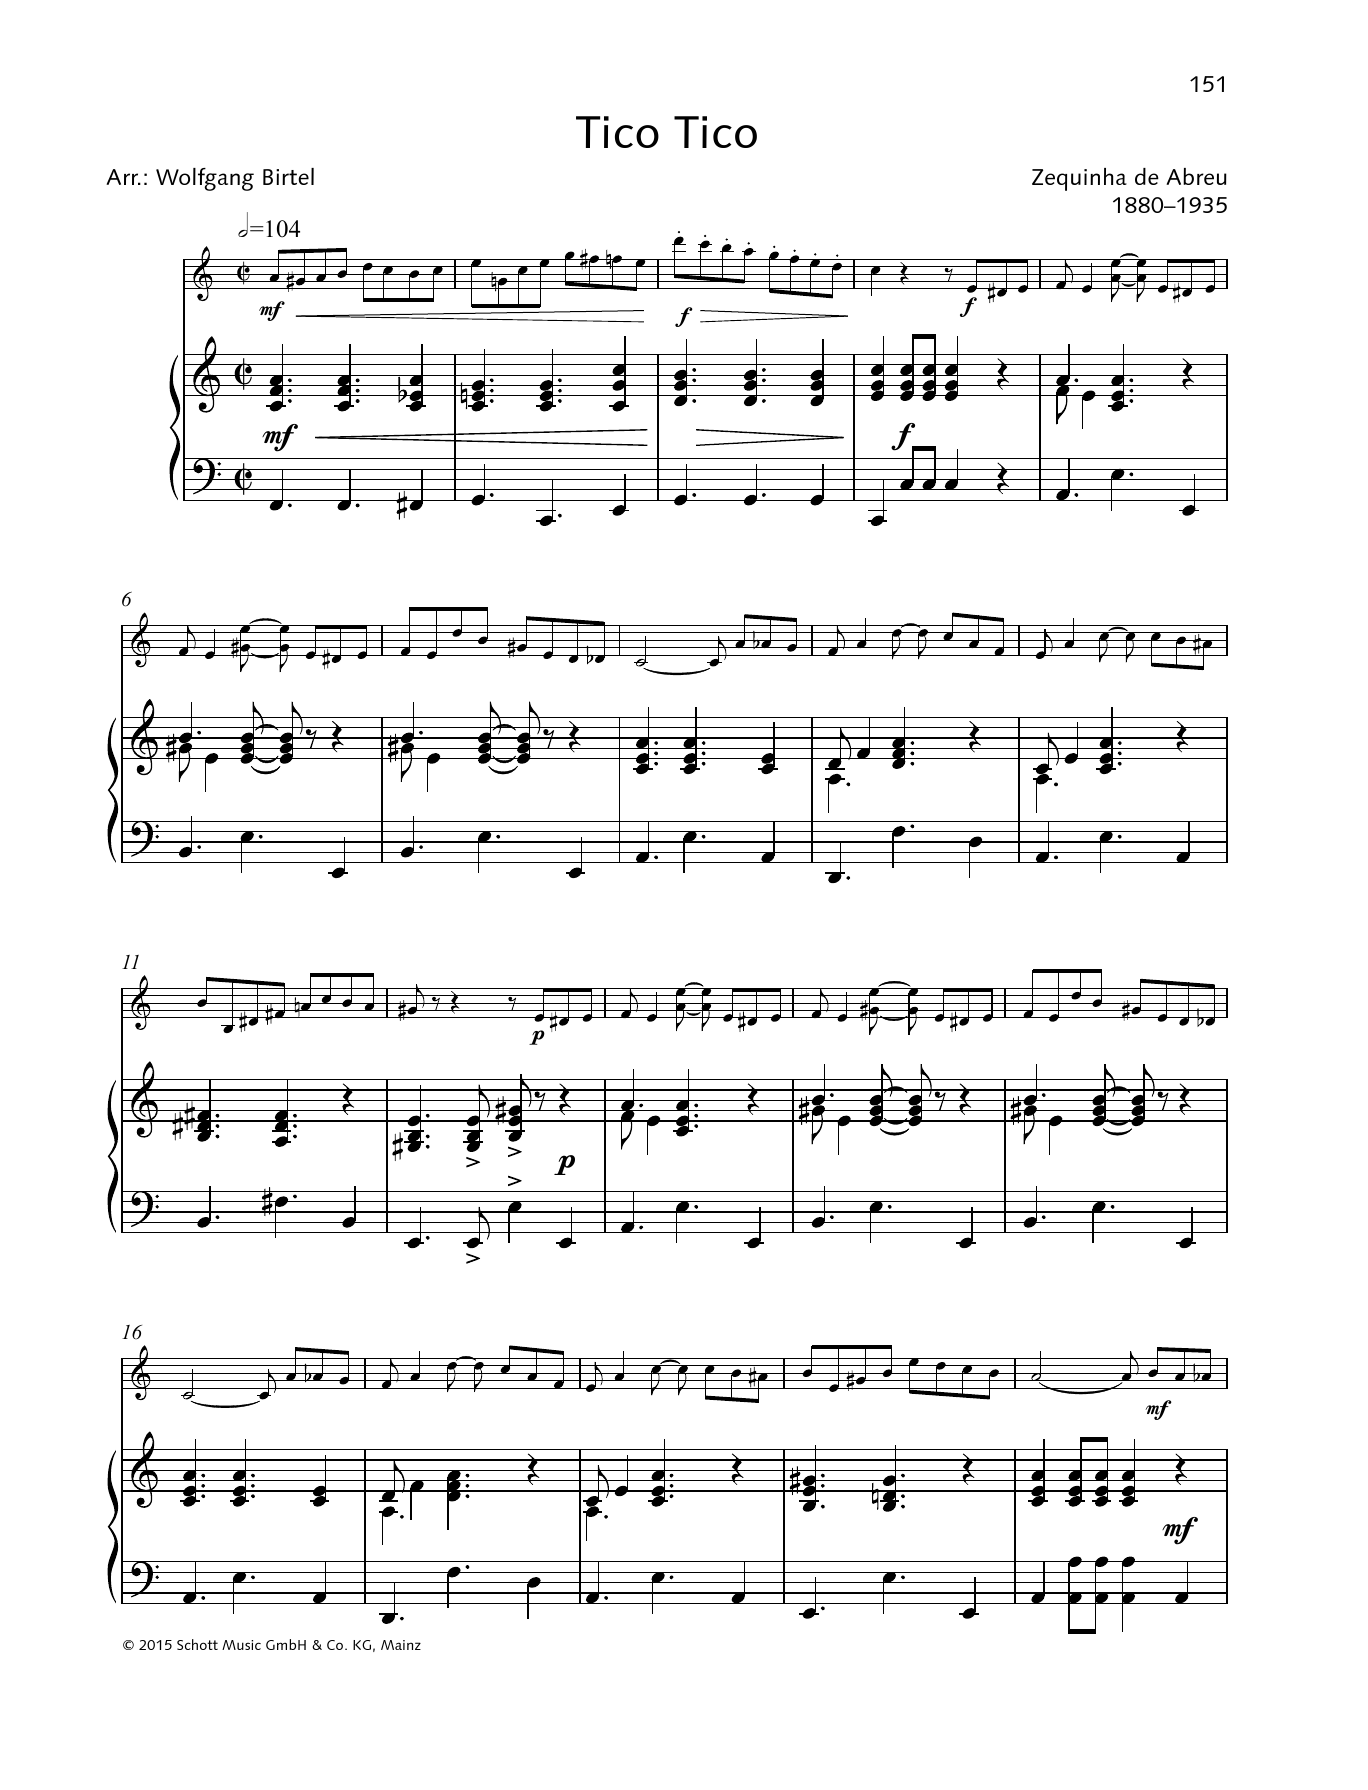 Zequinha de Abreu Tico Tico Sheet Music Notes & Chords for String Solo - Download or Print PDF